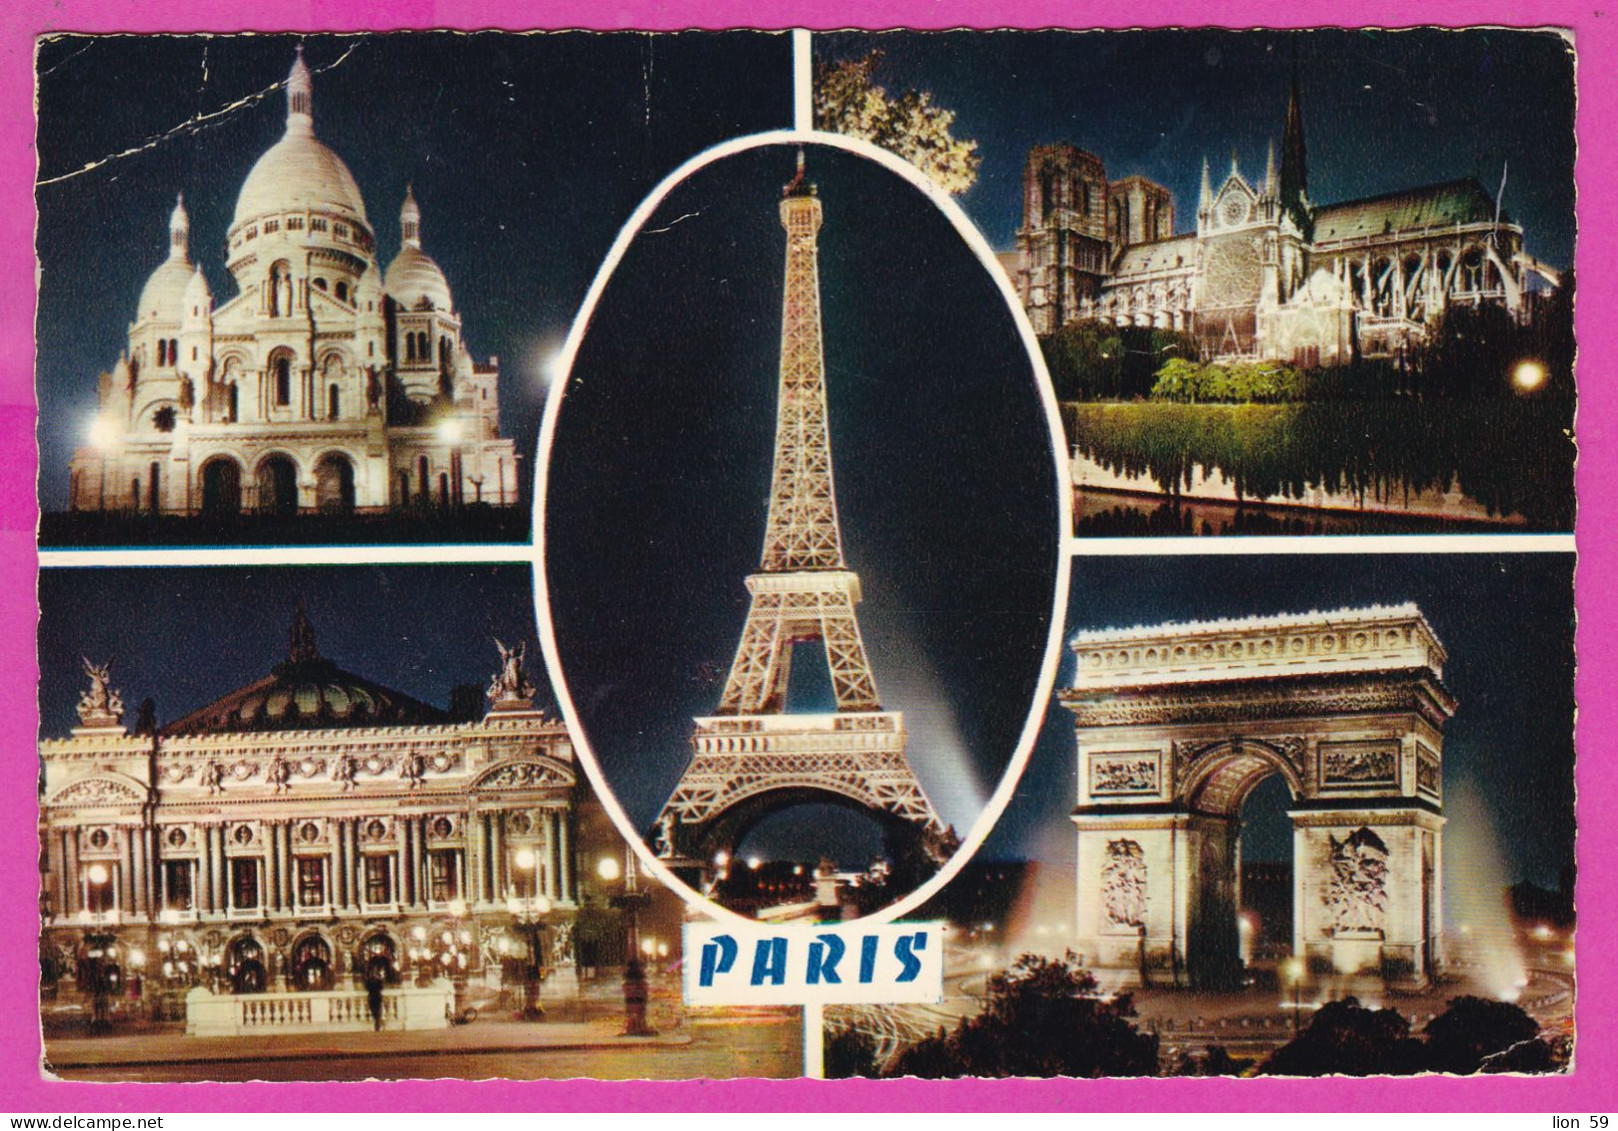 294194 / France - PARIS Notre-Dame Tour Eiffel PC 1970 Postage Due USED 0.40 Fr. Marianne De Cheffer Flamme Protection - 1967-1970 Marianne Of Cheffer